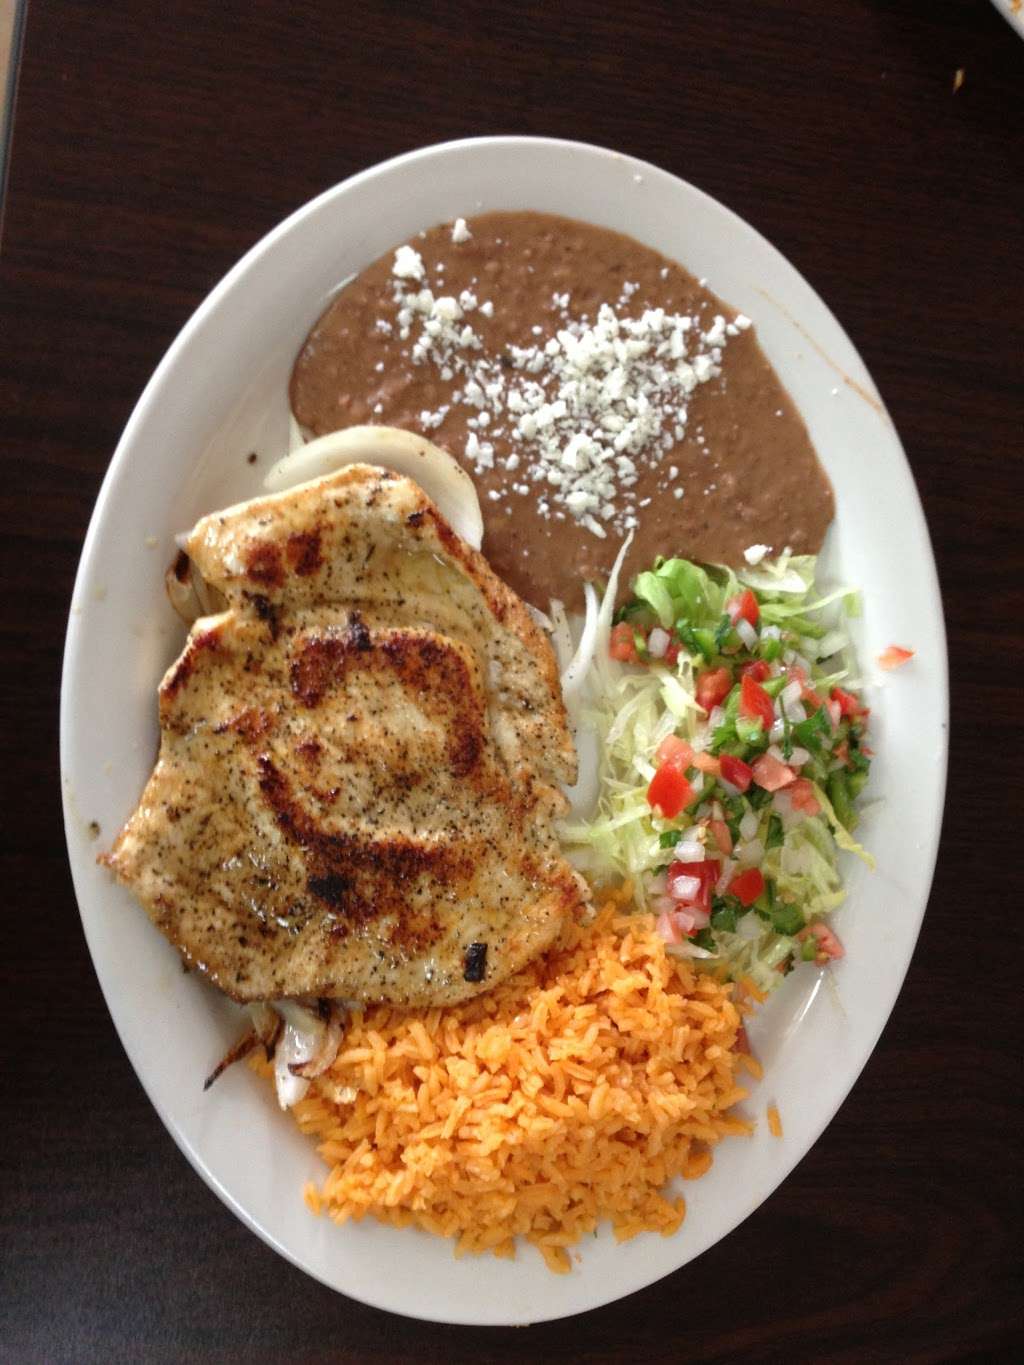 Camelia Mexican Restaurant | 916 Edgebrook Dr, Houston, TX 77034 | Phone: (832) 649-4439